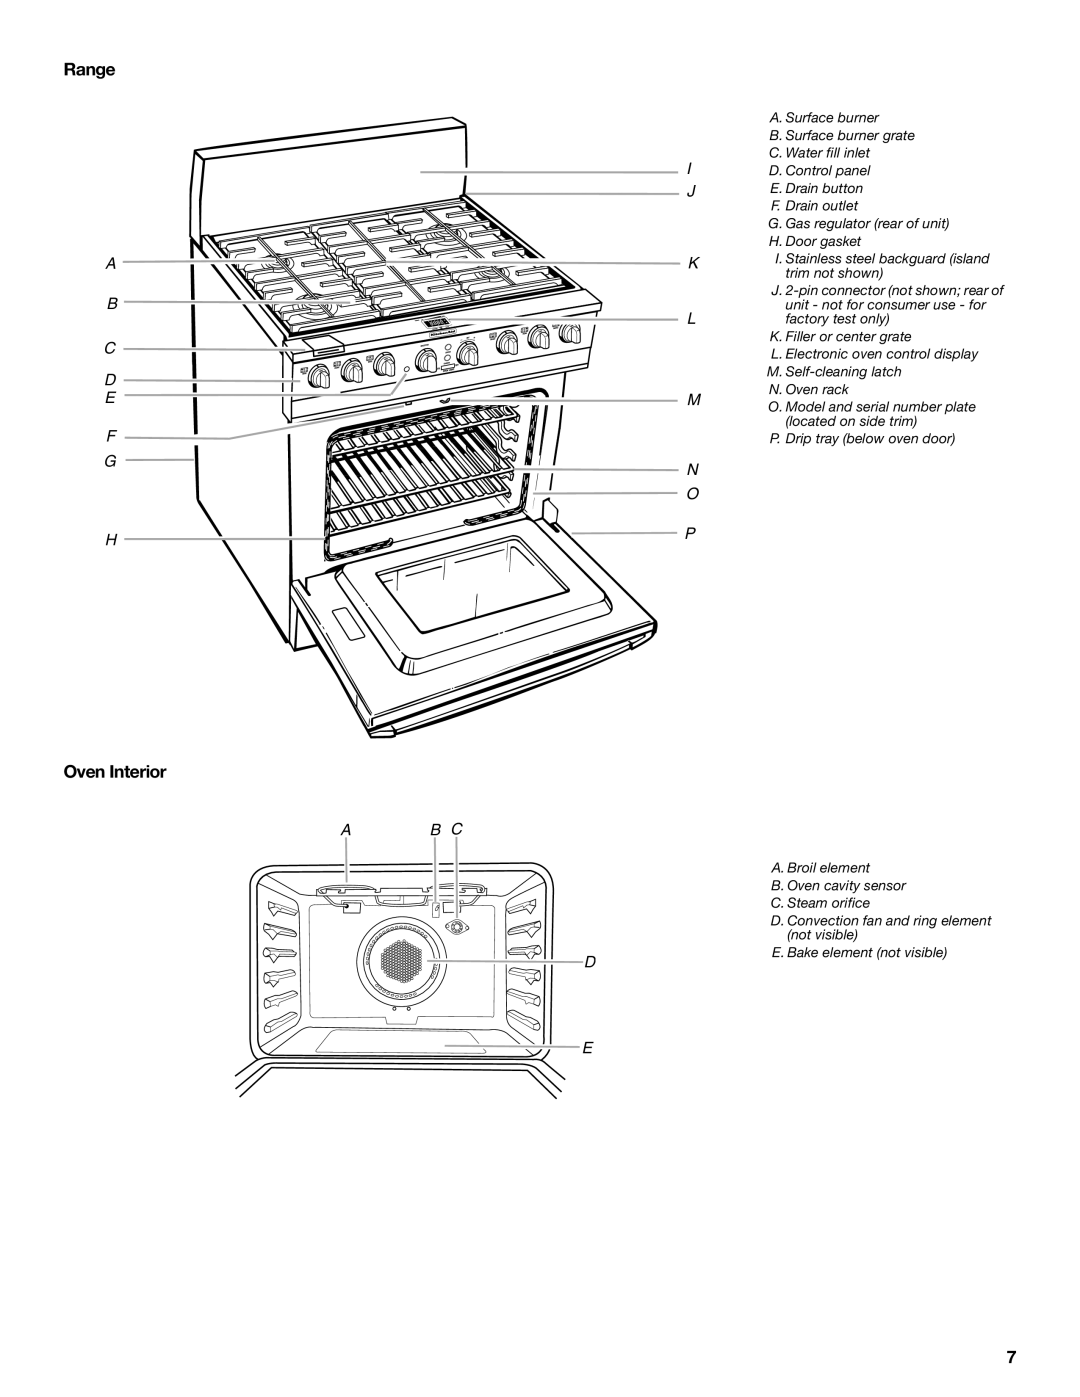 KitchenAid YKDRP767 Range, Oven Interior, I J A K B, F G N O H P, Ab C, D. Control panel E. Drain button F. Drain outlet 